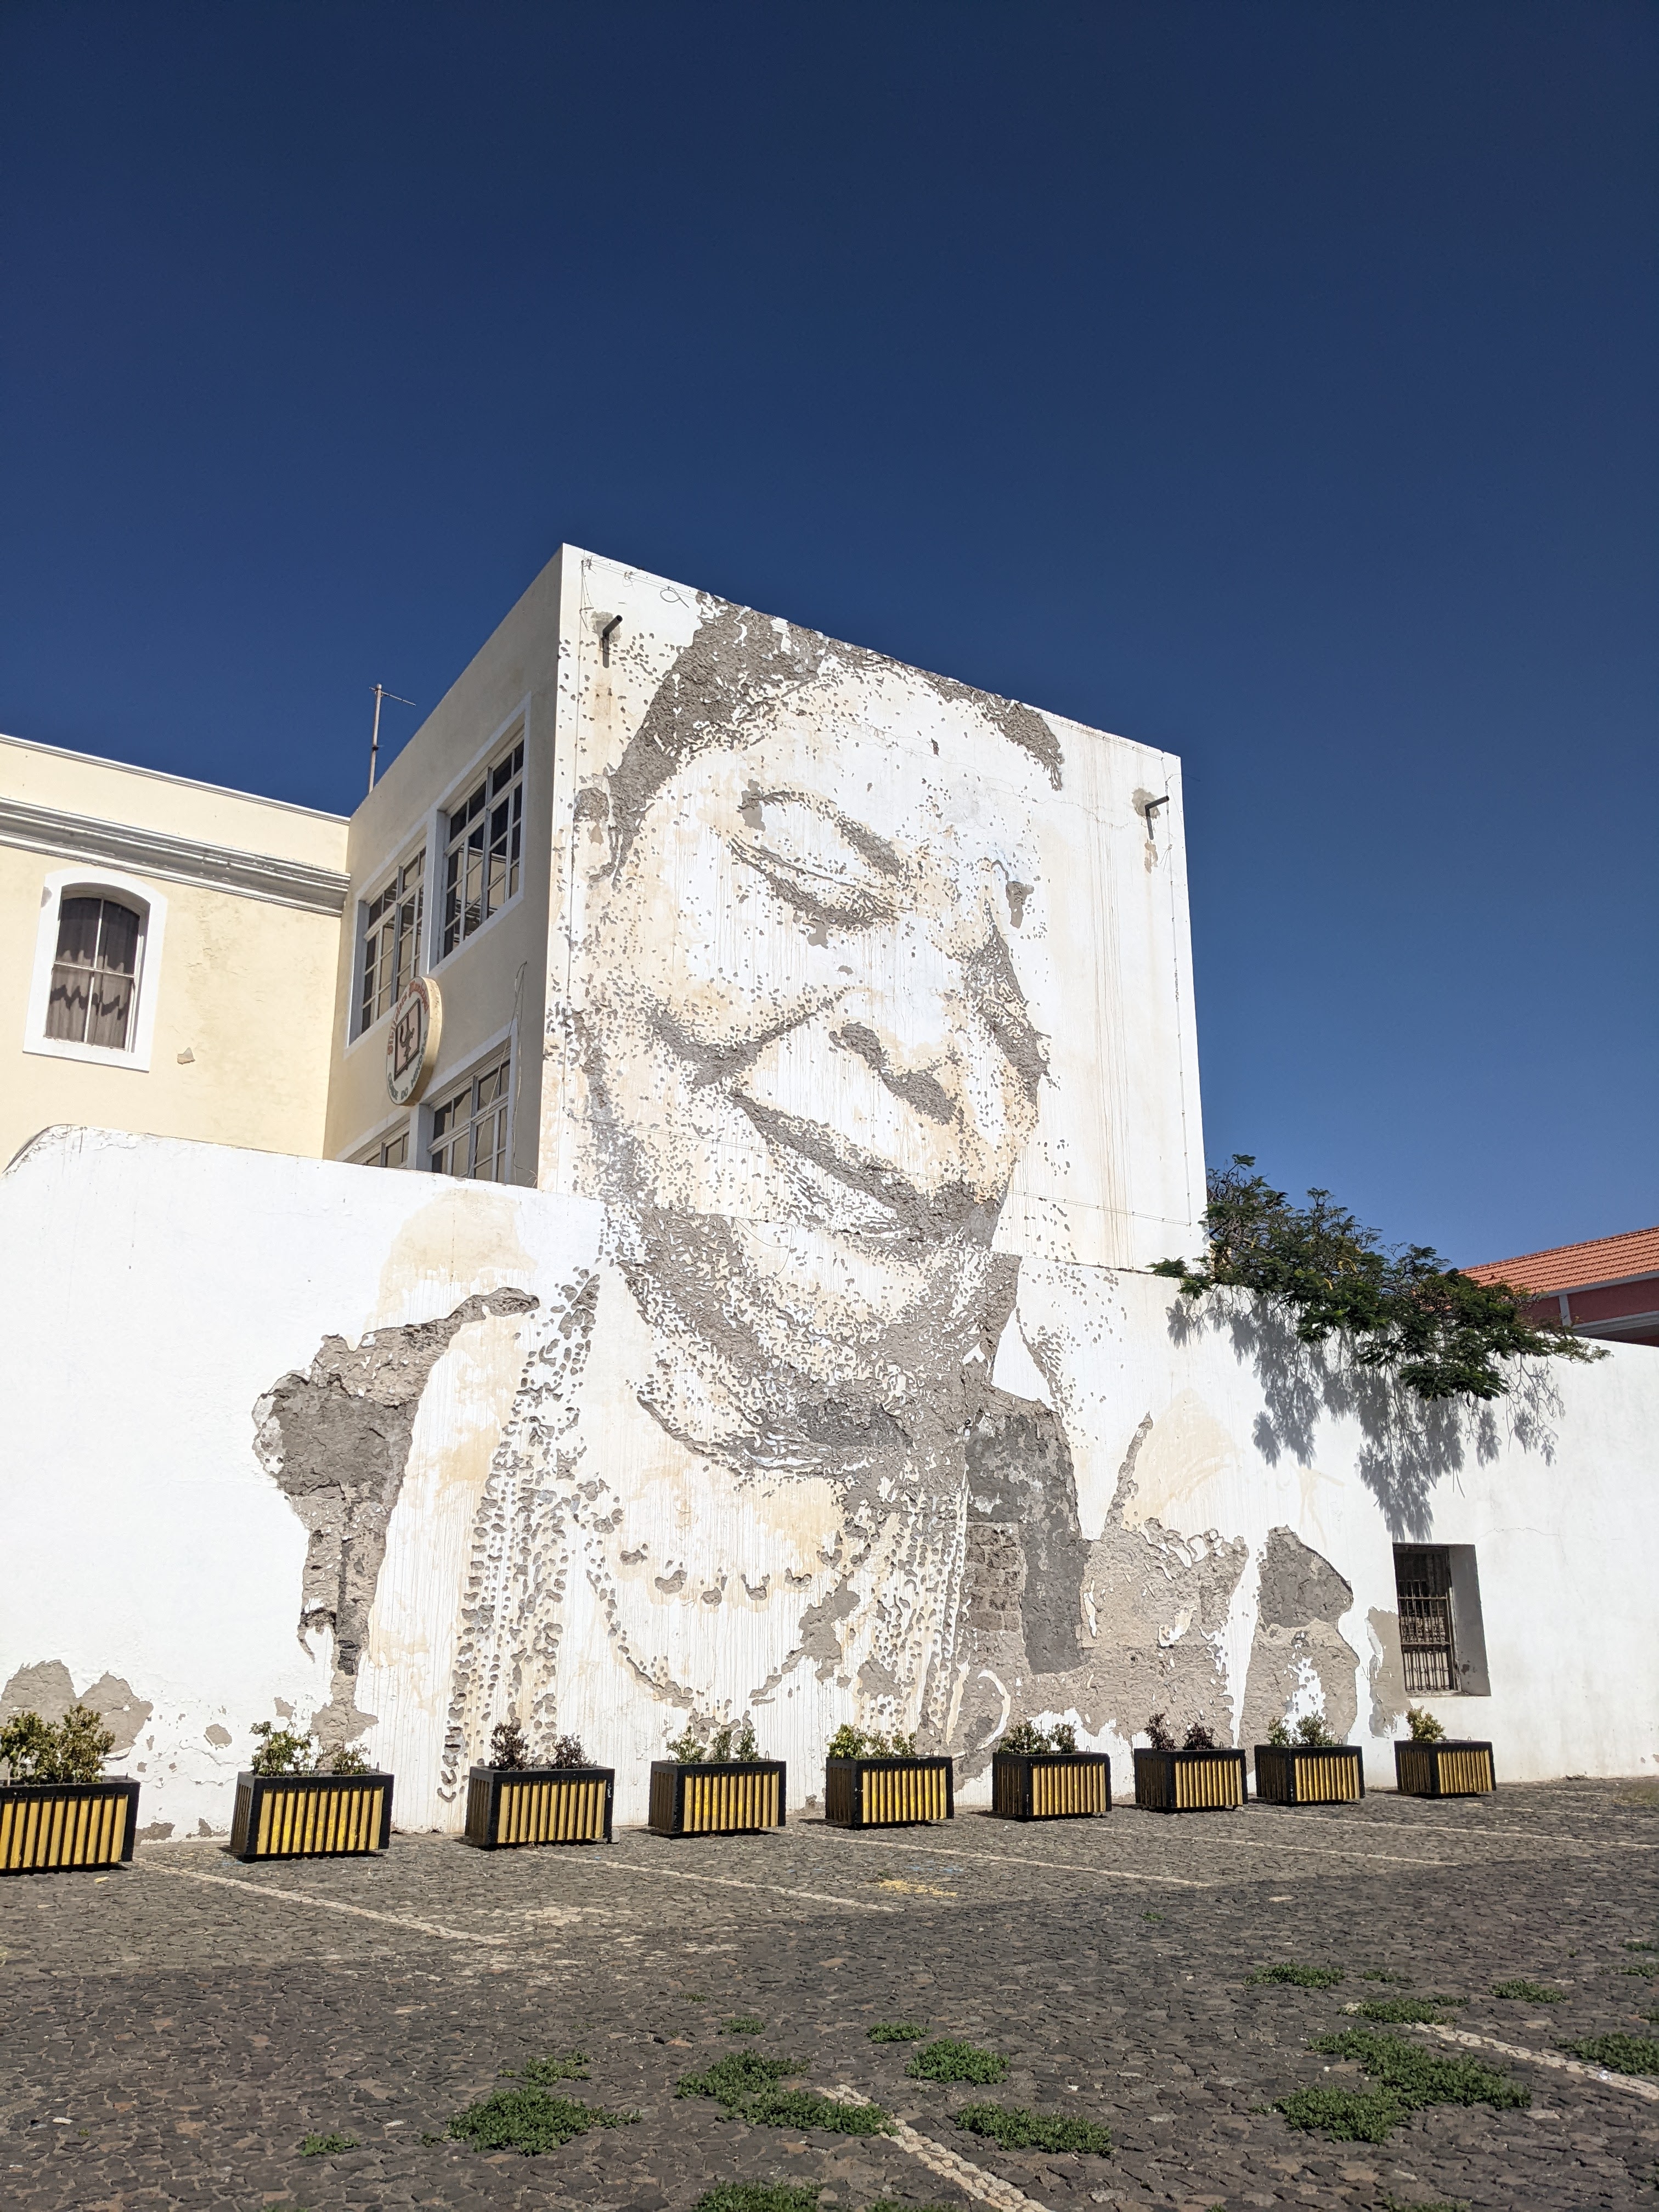 Mural of Cesaria Evora in the center of Mindelo